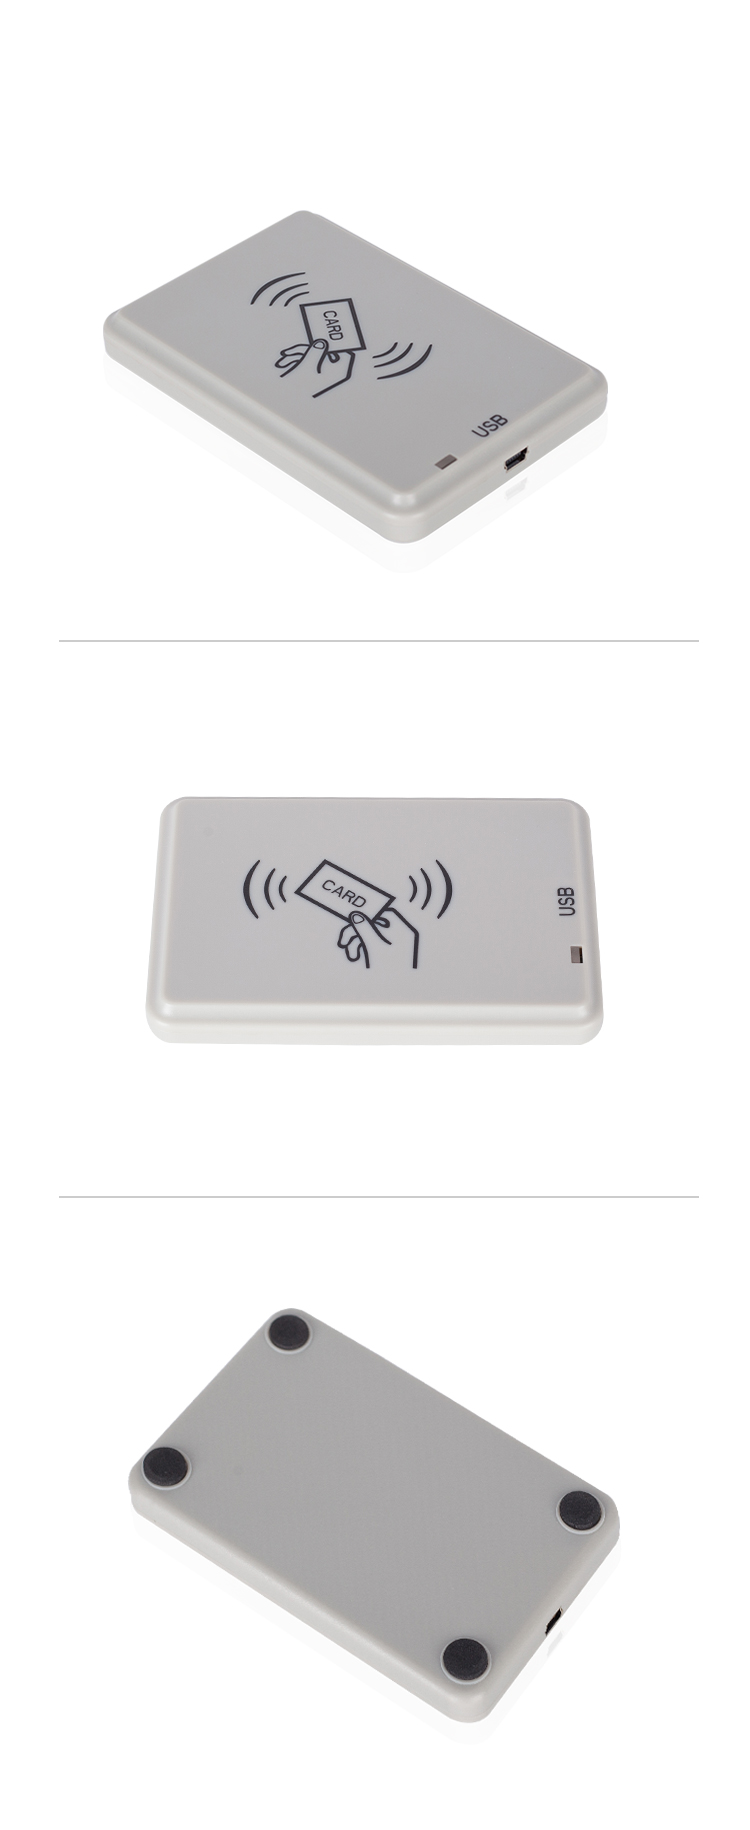 Contactless Portable NFC Reader 13.56MHz HF Reader Writer Module